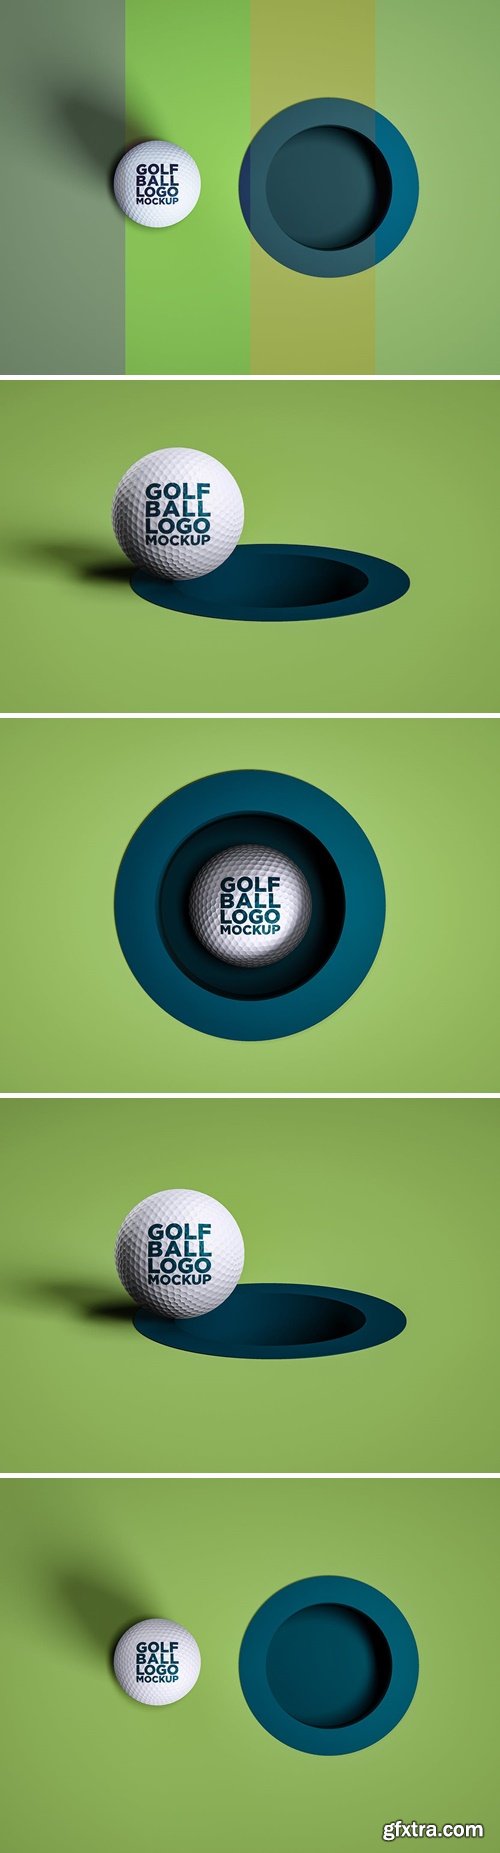 Golf Ball Logo Mockup 003 UCTUHBV